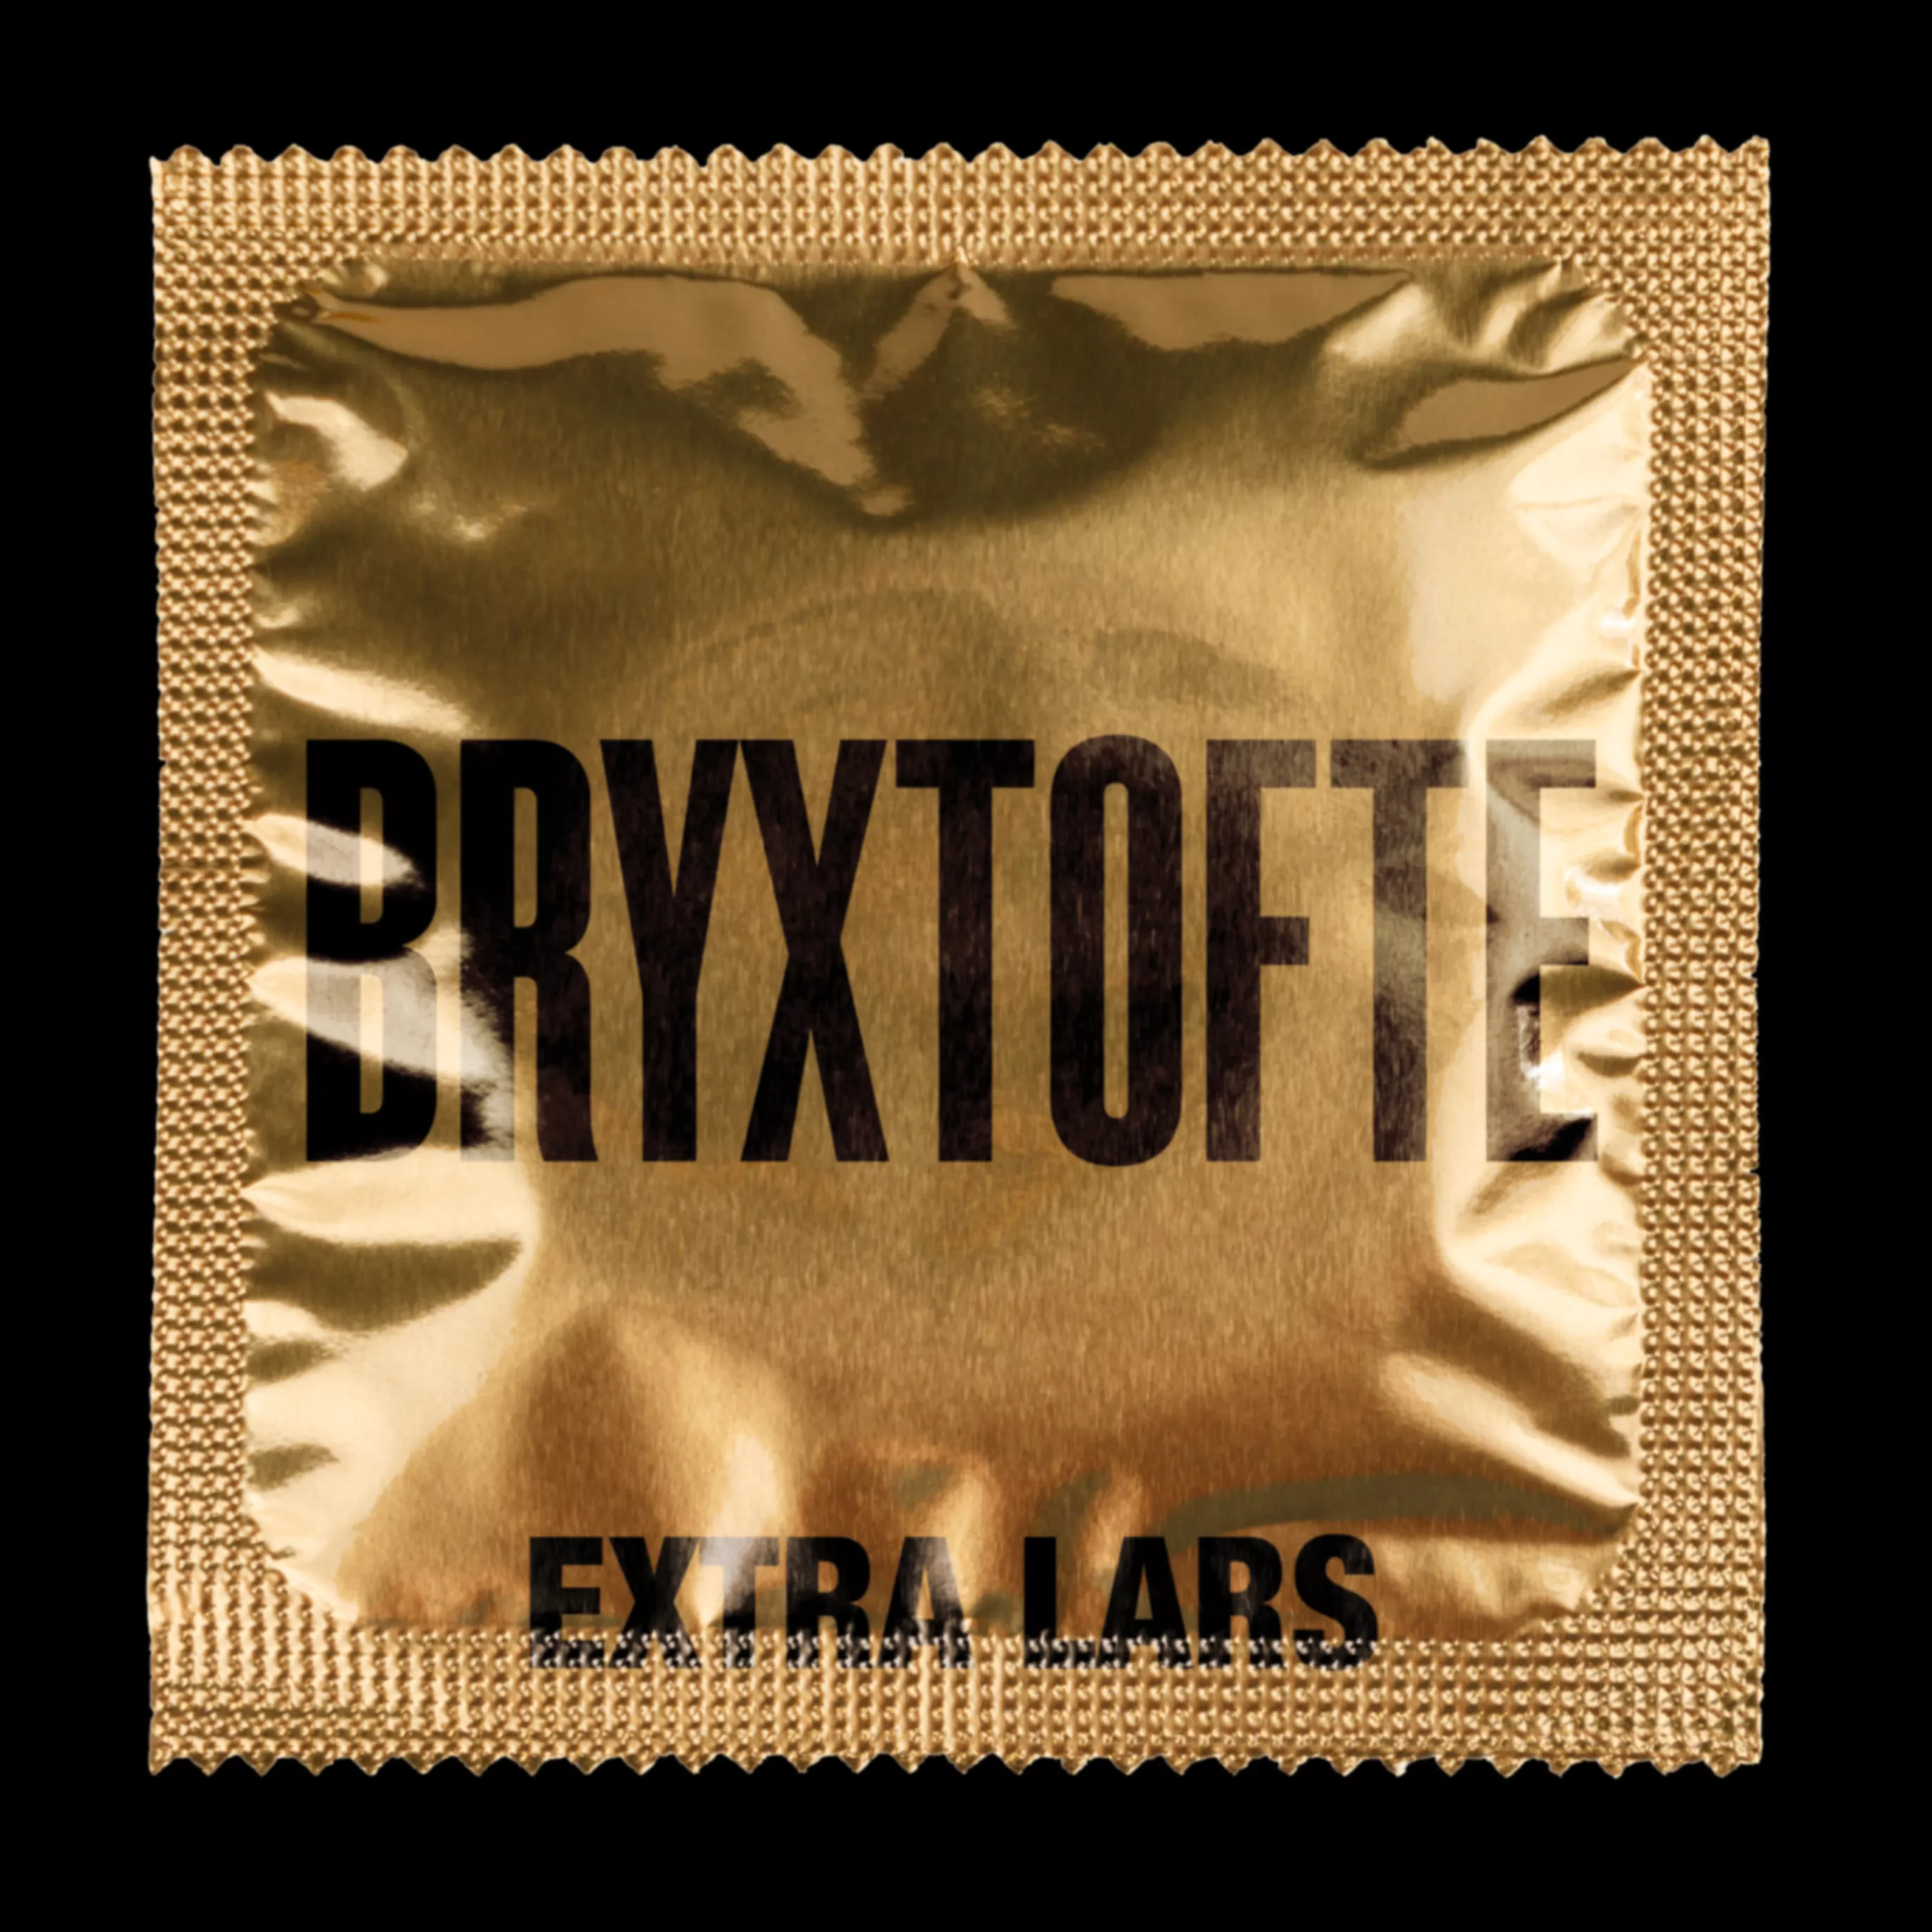 Extra Lars - Bryxtofte